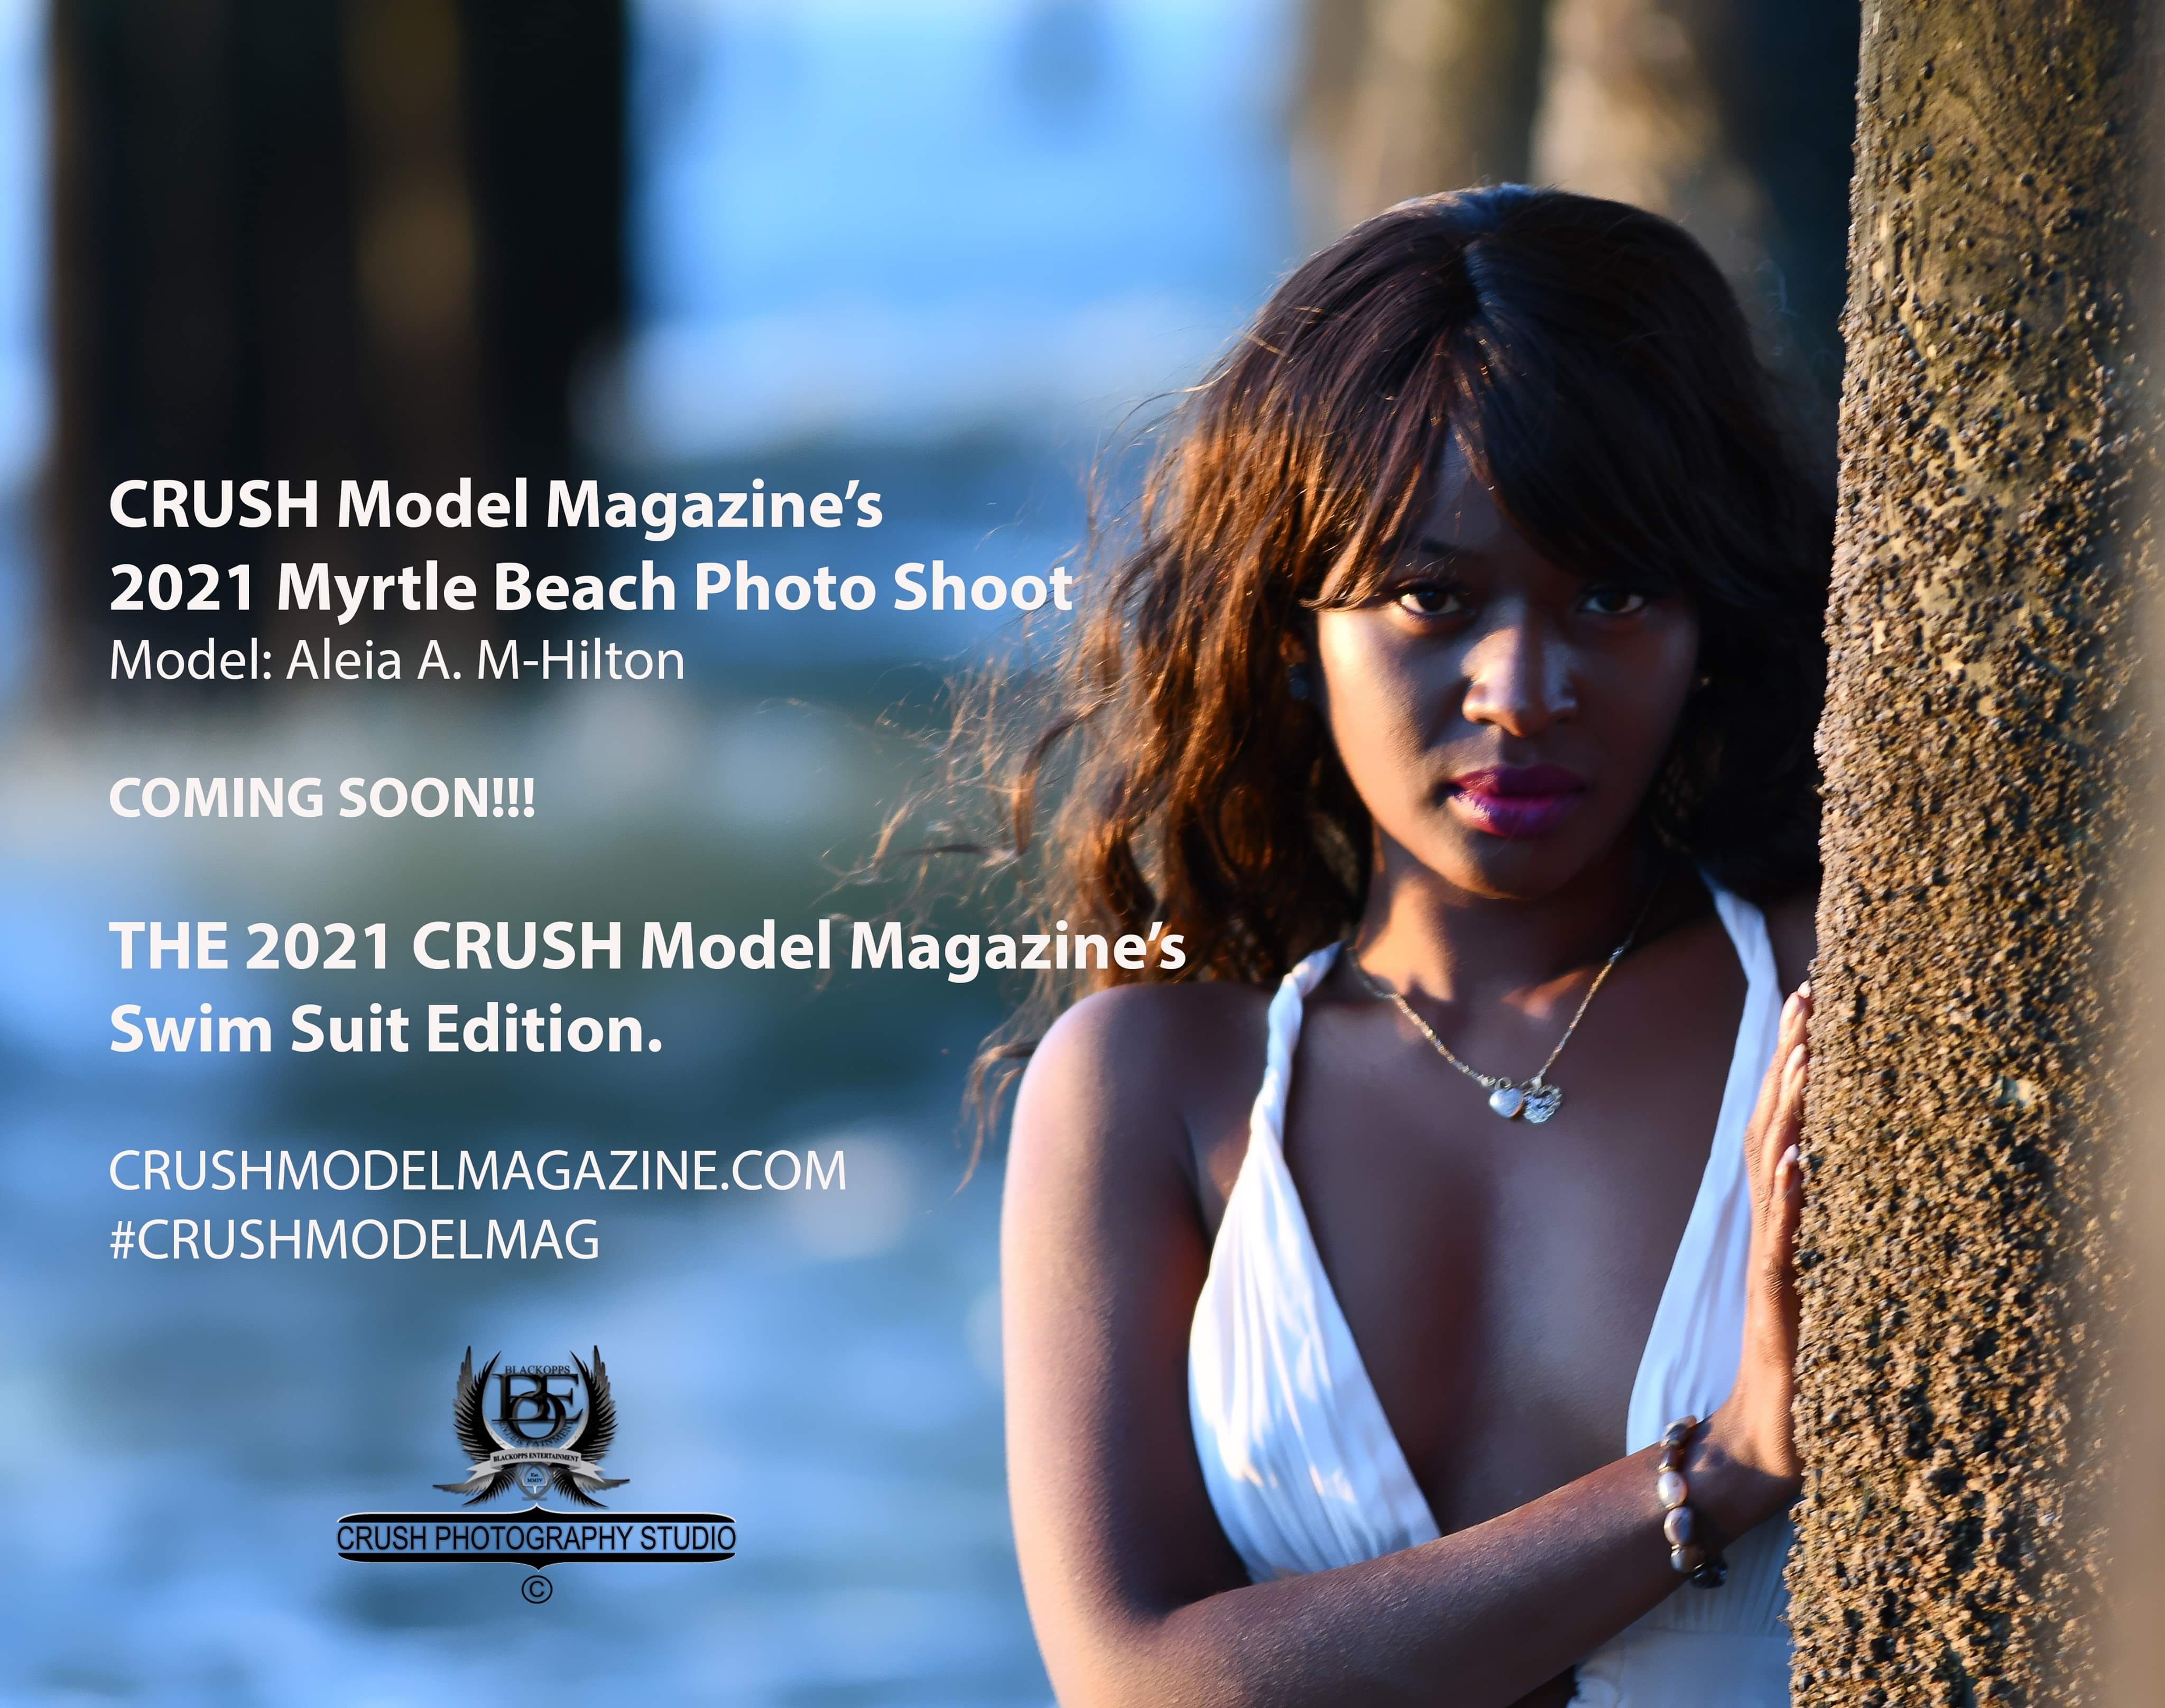 CRUSH Model Magazine’s 2021 Myrtle Beach Photo Shoot video.